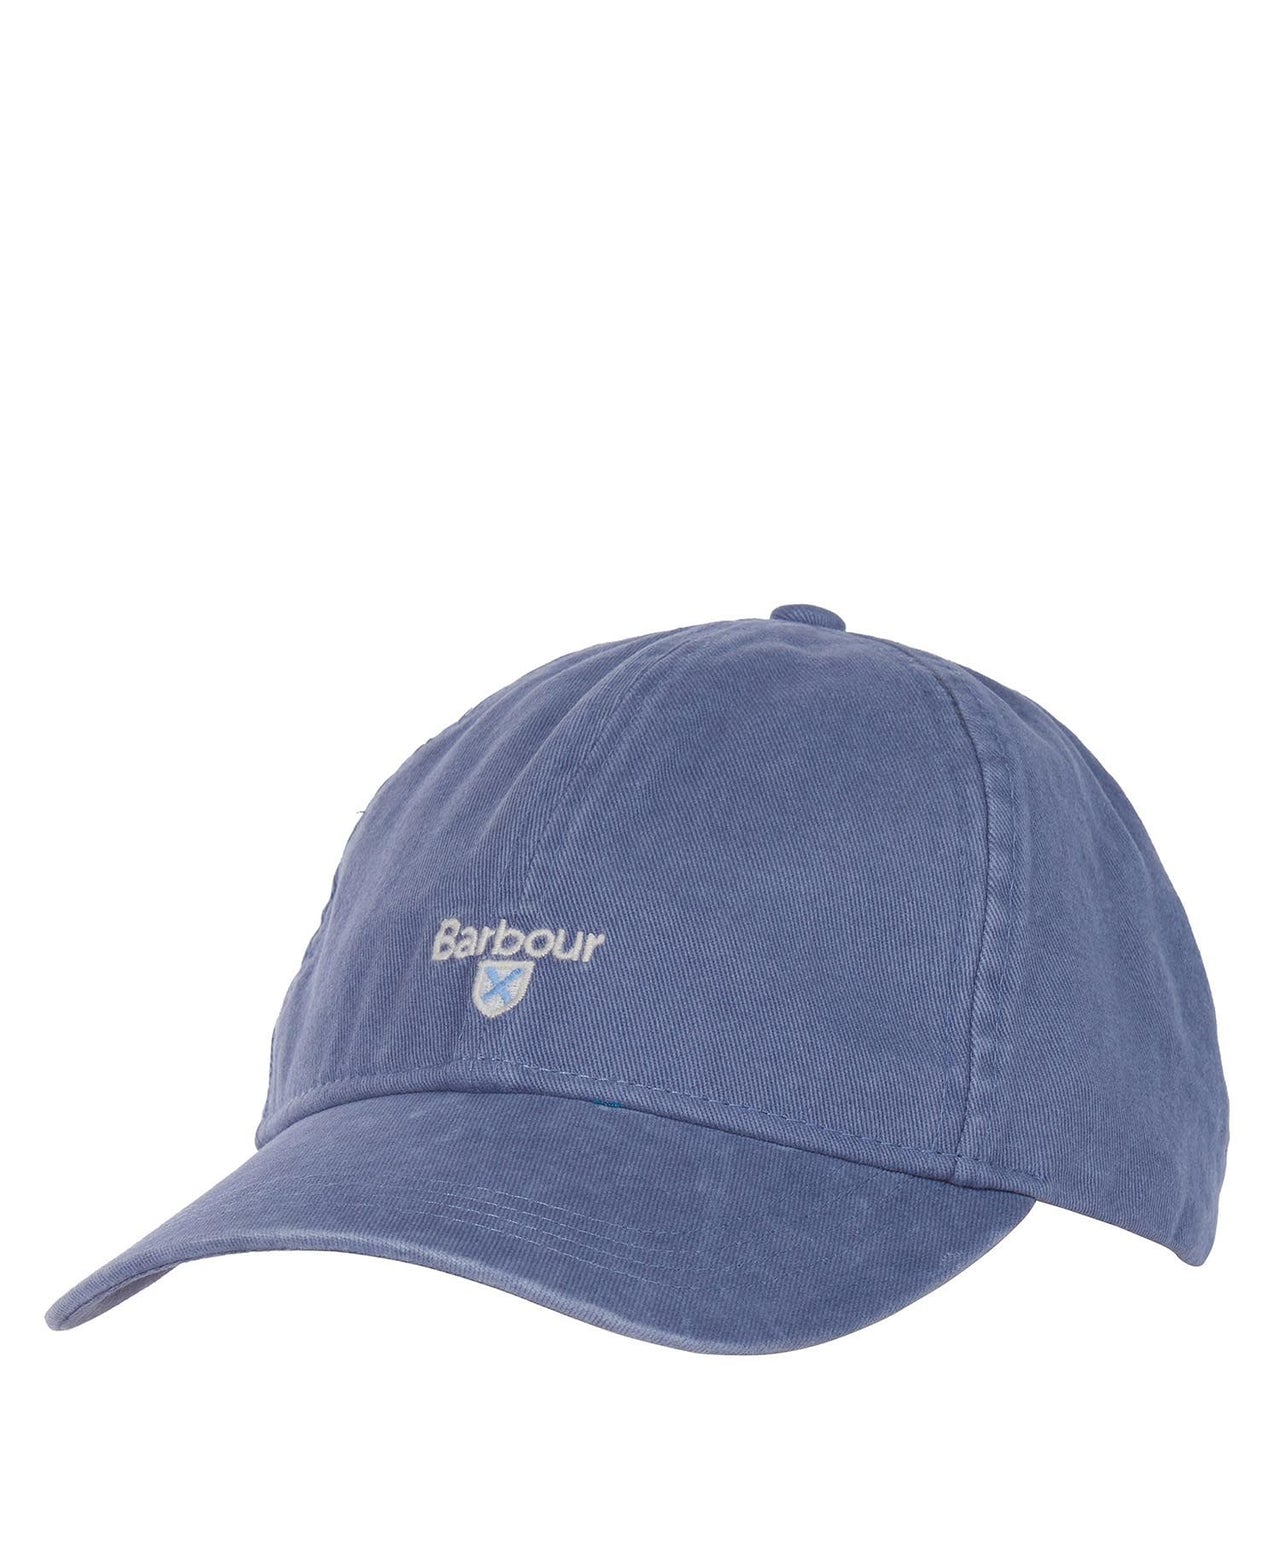 Barbour Blue Cascade Sports Cap